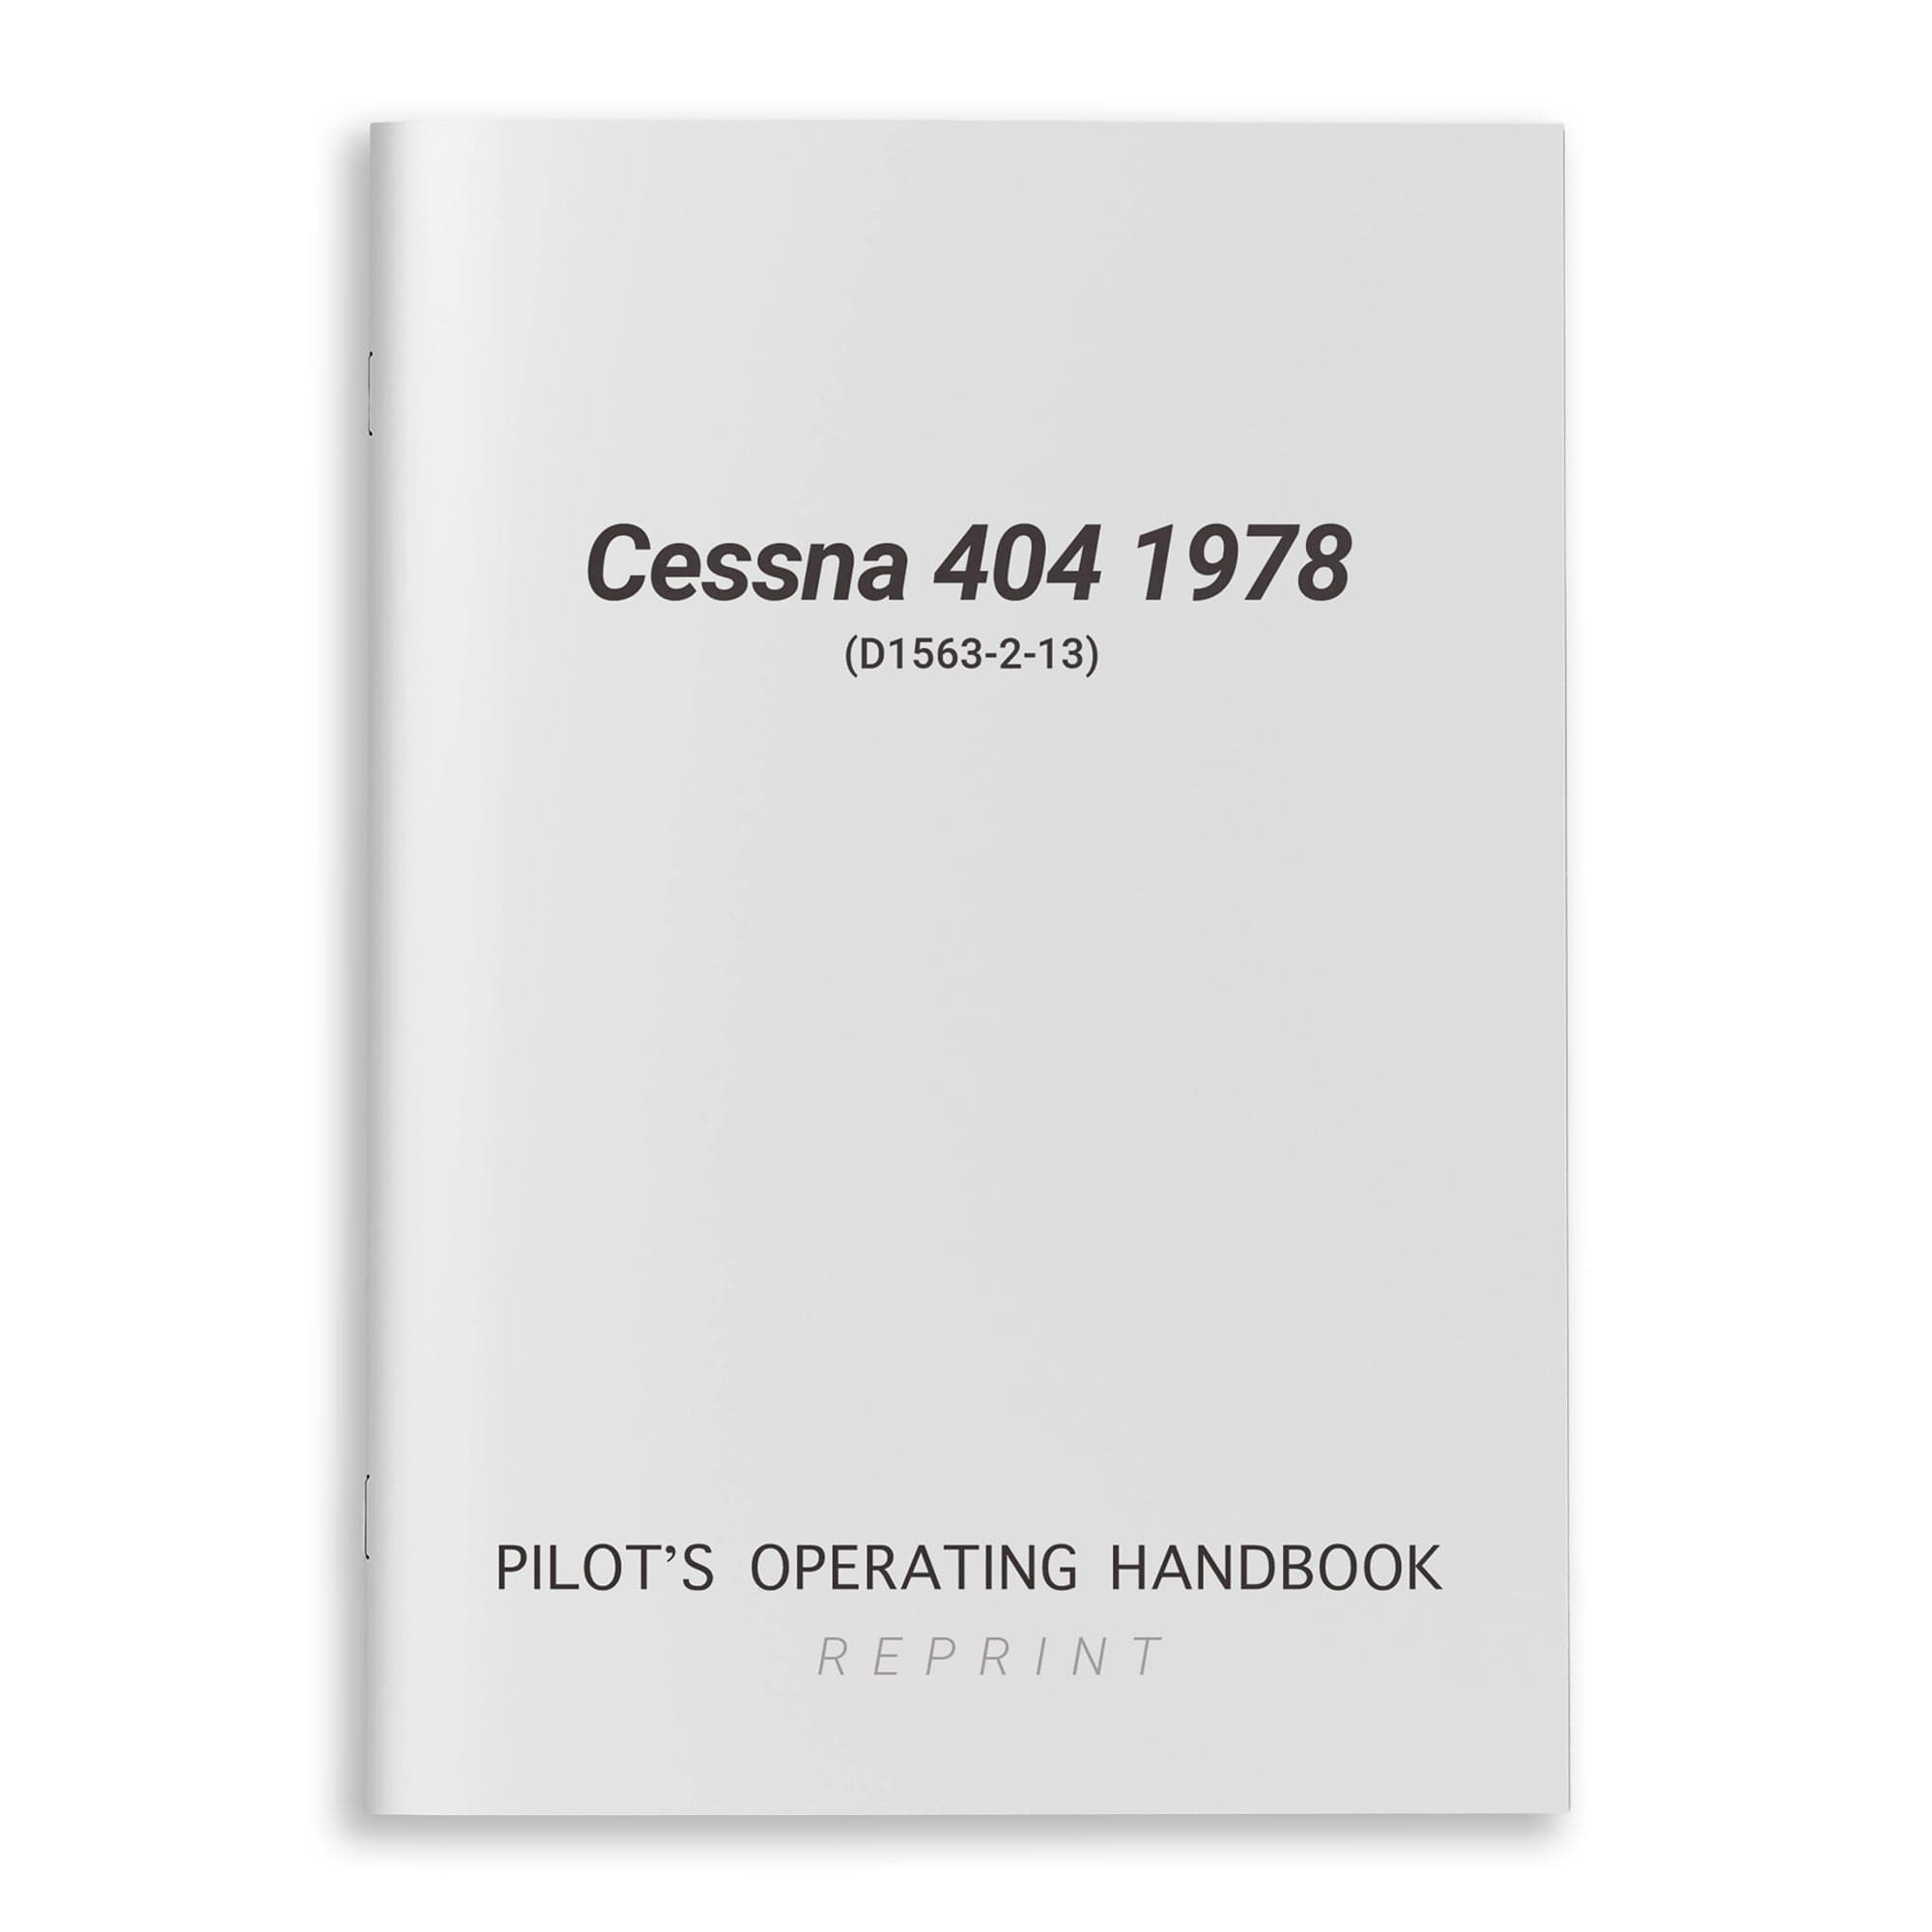 Cessna 404 1978 Pilot's Operating Handbook (D1563-2-13)